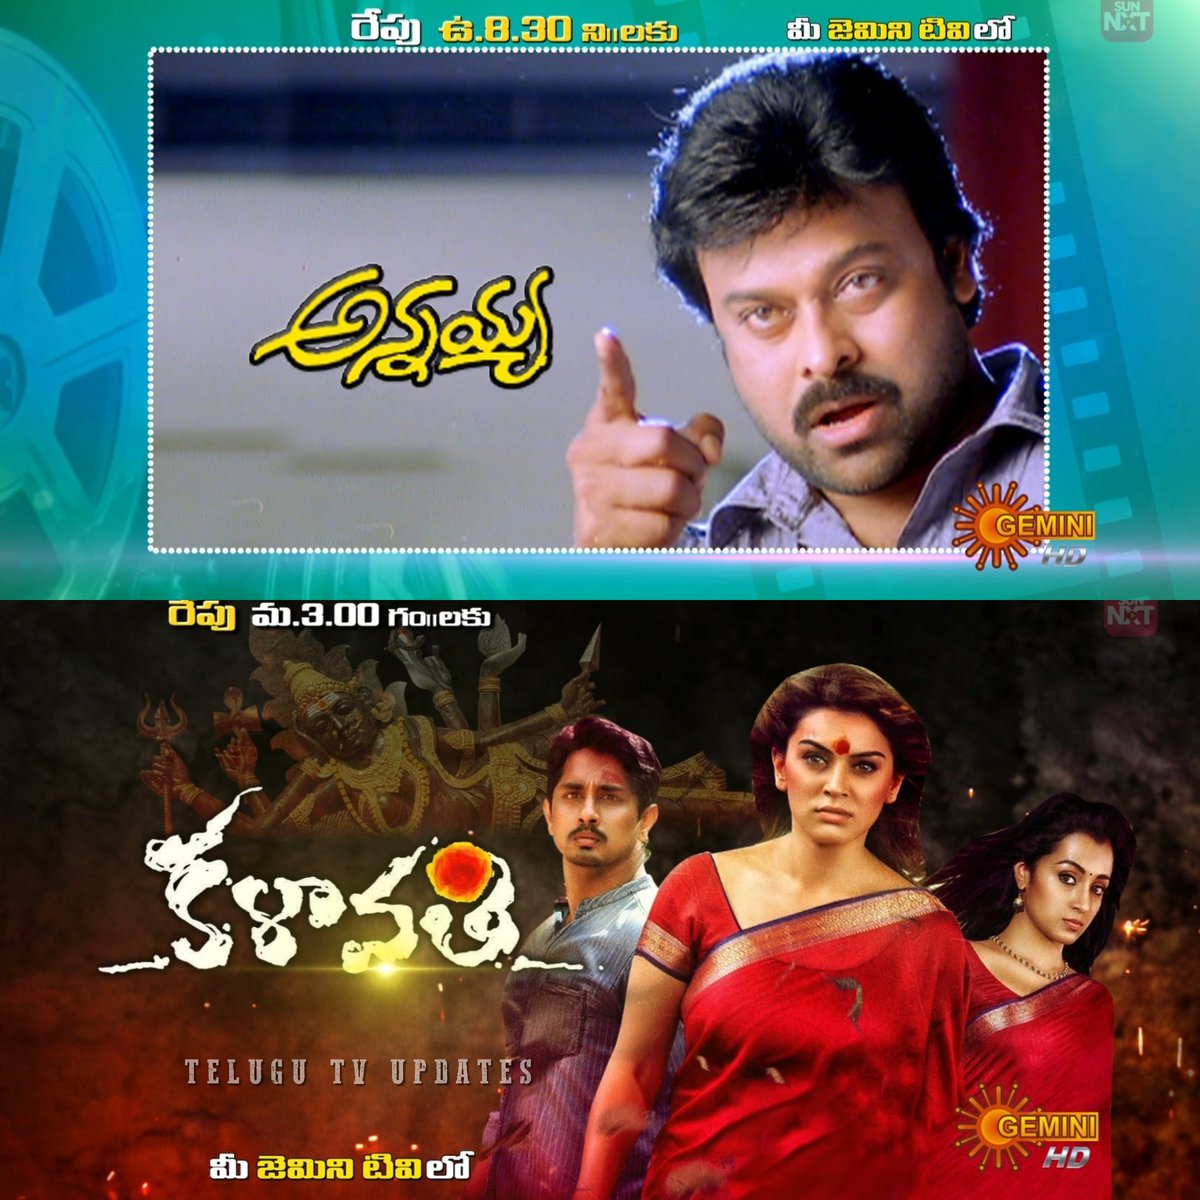 Tomorrow movies on #GeminiTV

#Annayya 8:30am
#Kalavathi 3pm

#Chiranjeevi #Soundarya #Raviteja #Siddharth #Trisha #Hansika